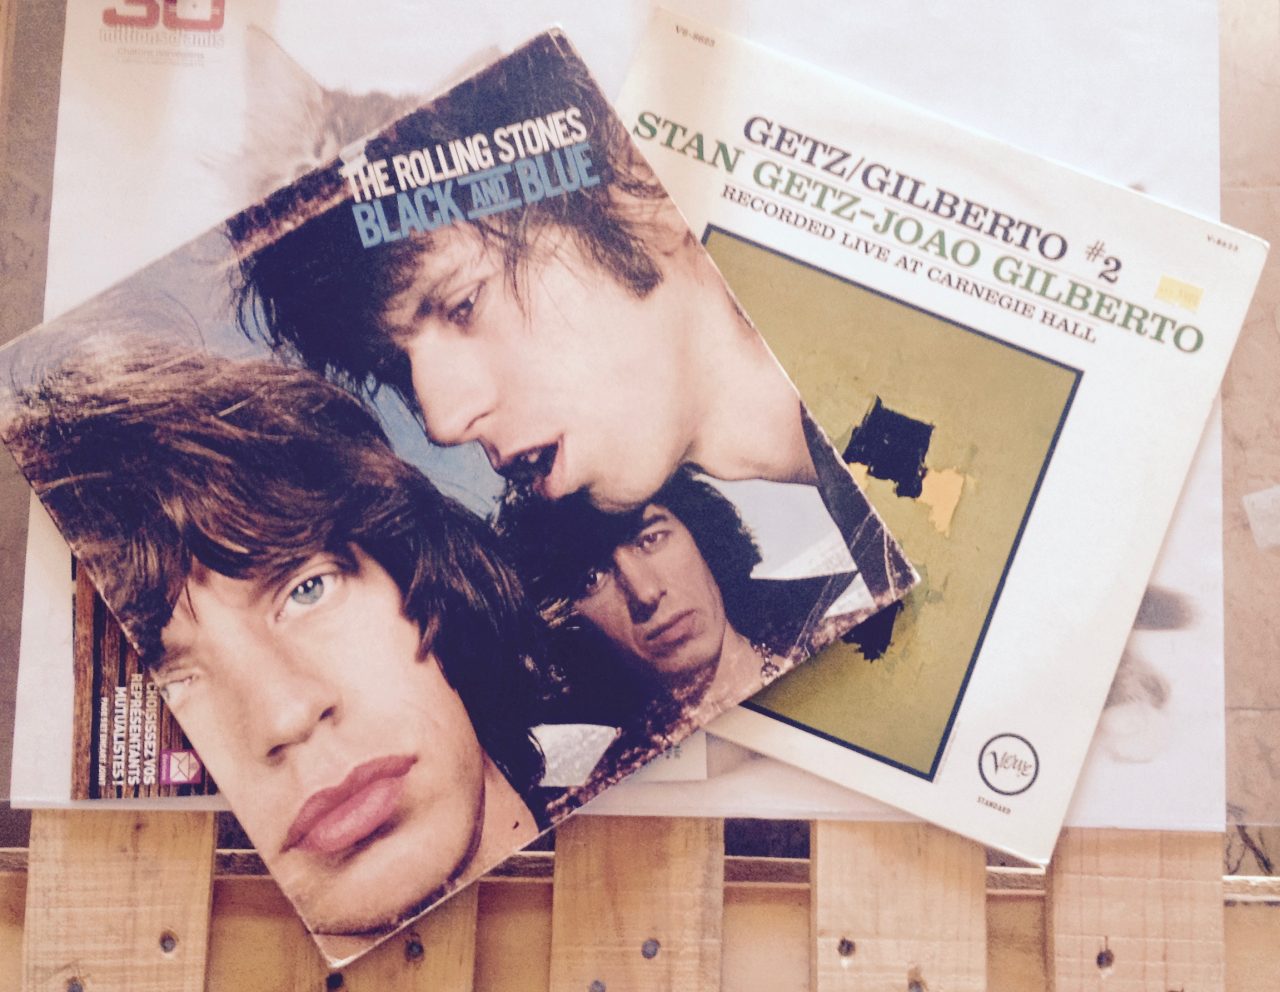 Rolling Stones et Getz/Gilberto